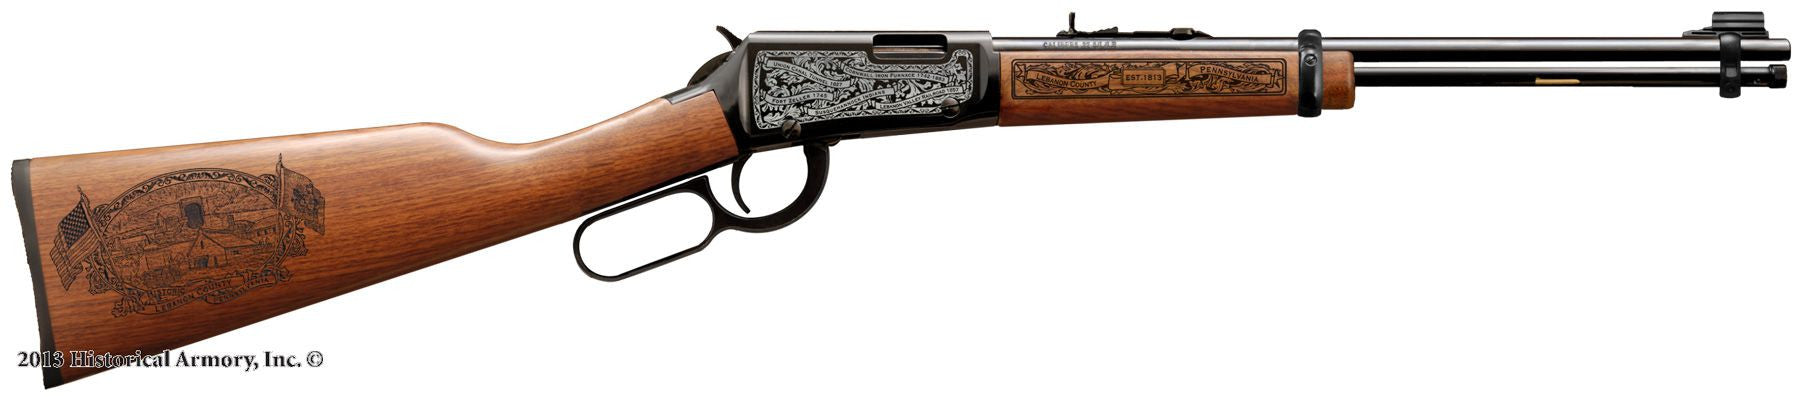 lebanon county pennsylvania engraved rifle h001